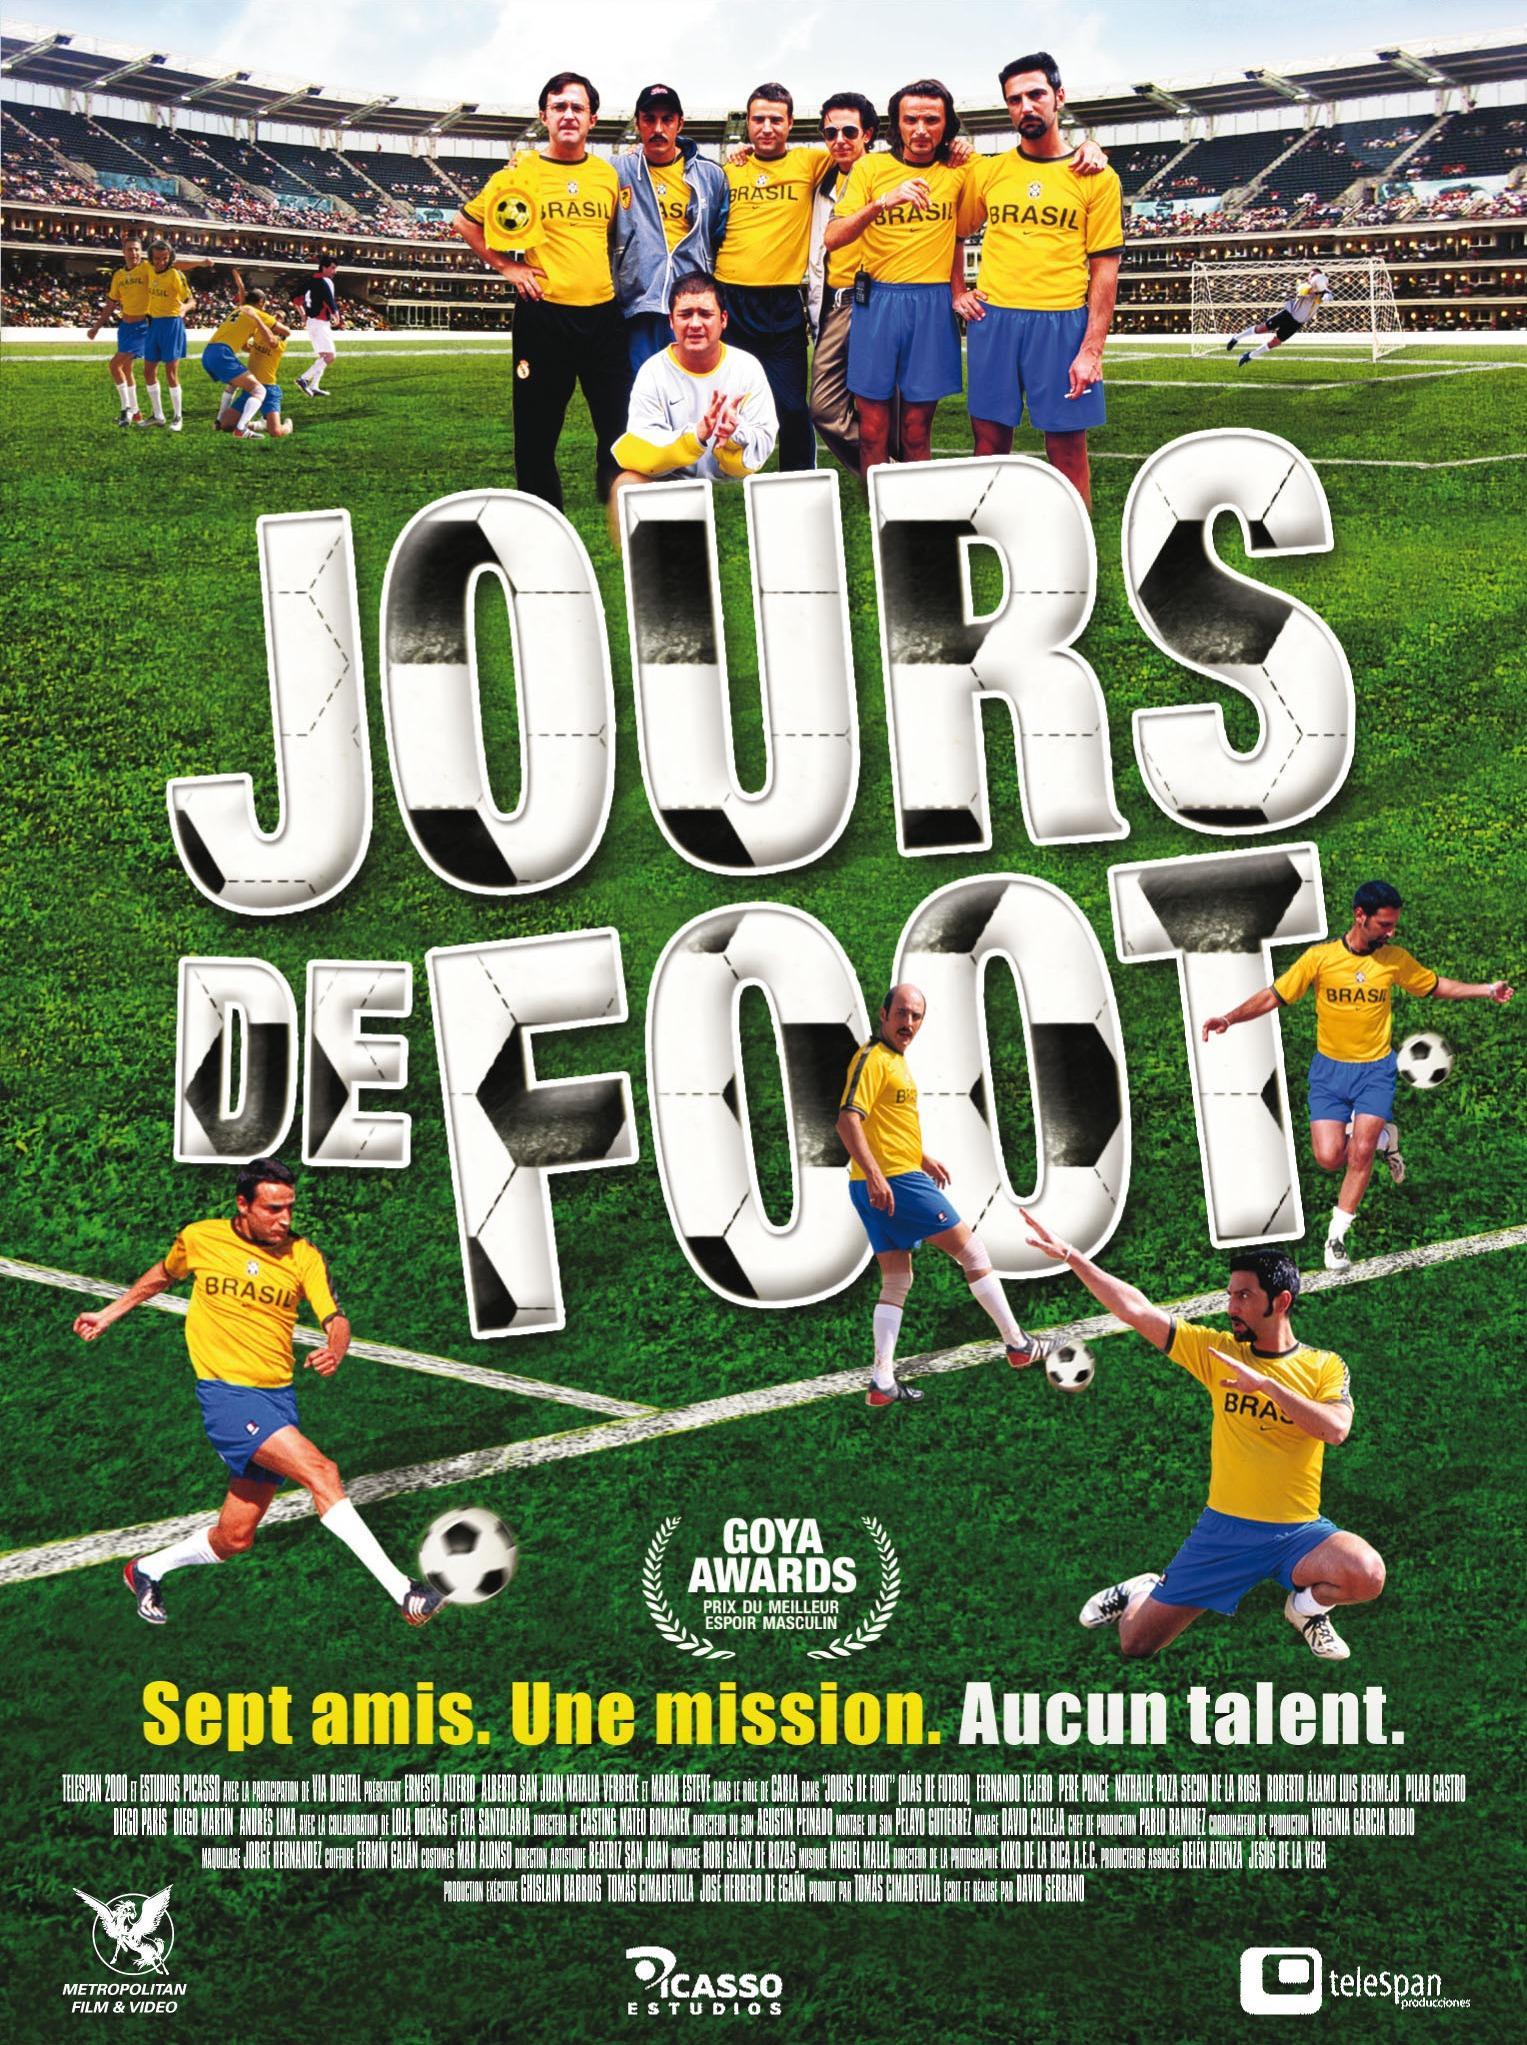 Постер фильма Días de fútbol